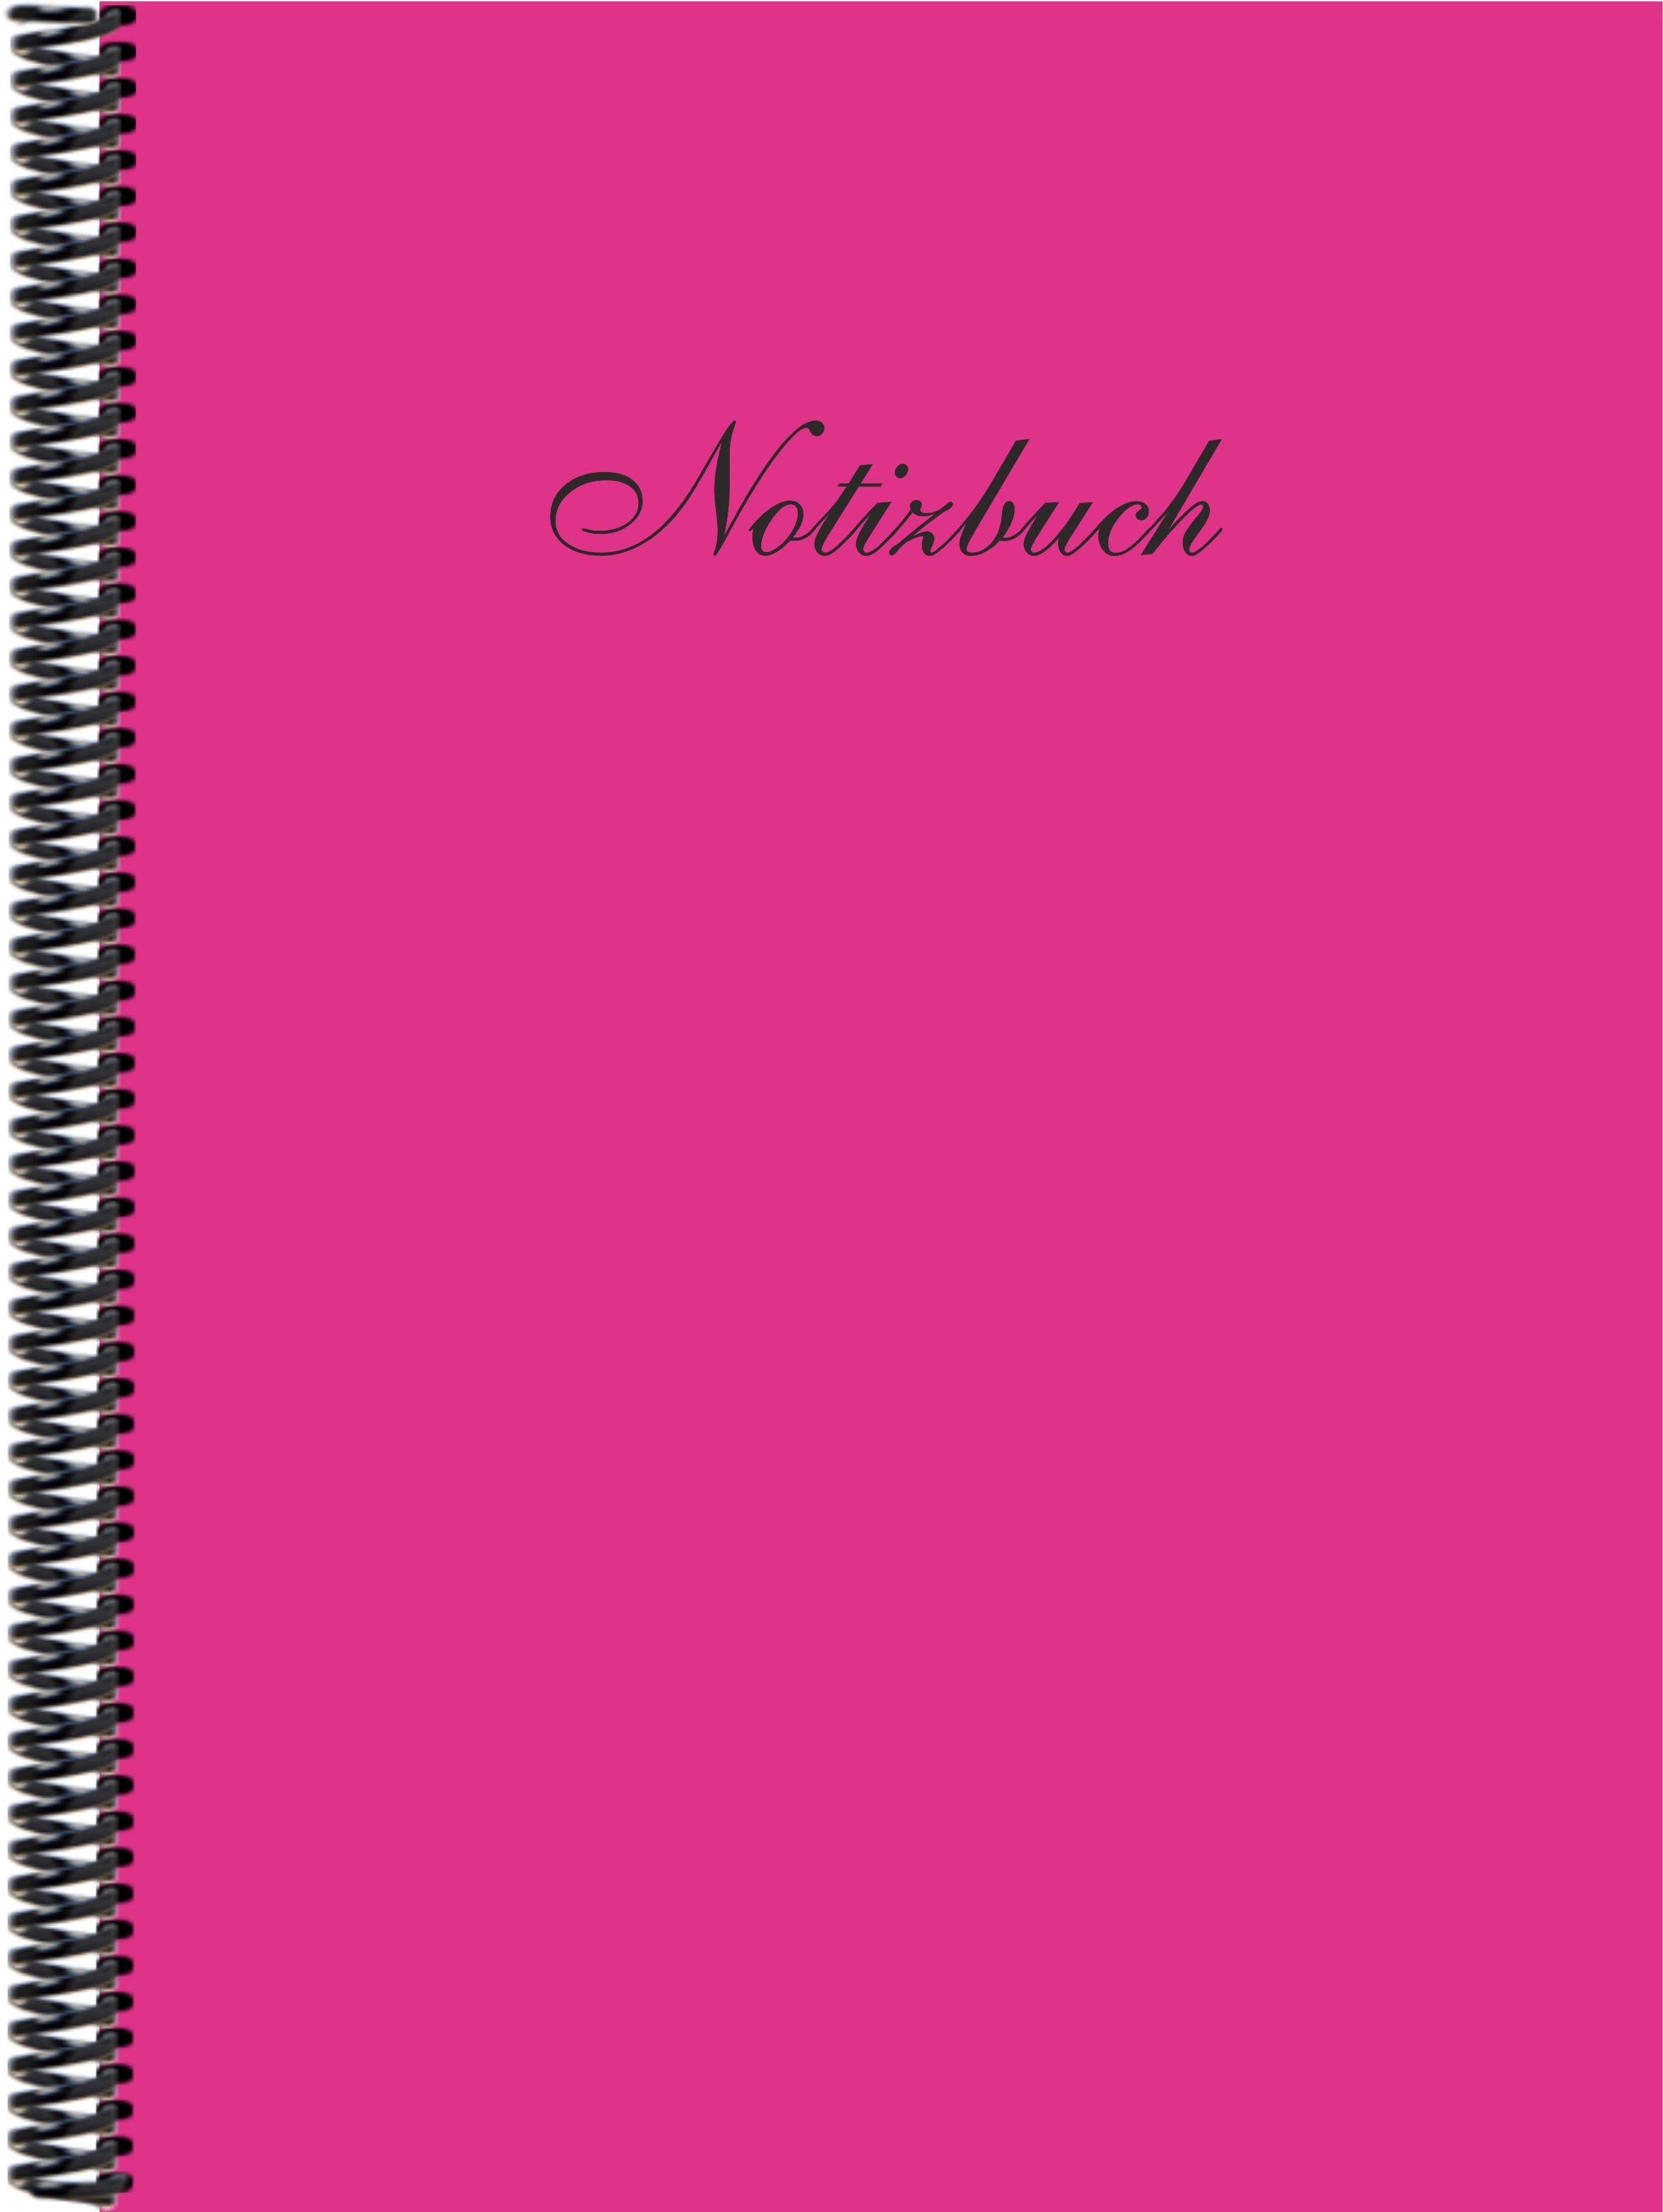 der Gmbh blanko, Verlag DINA4 pink E&Z Trendfarbe in Notizbuch Notizbuch